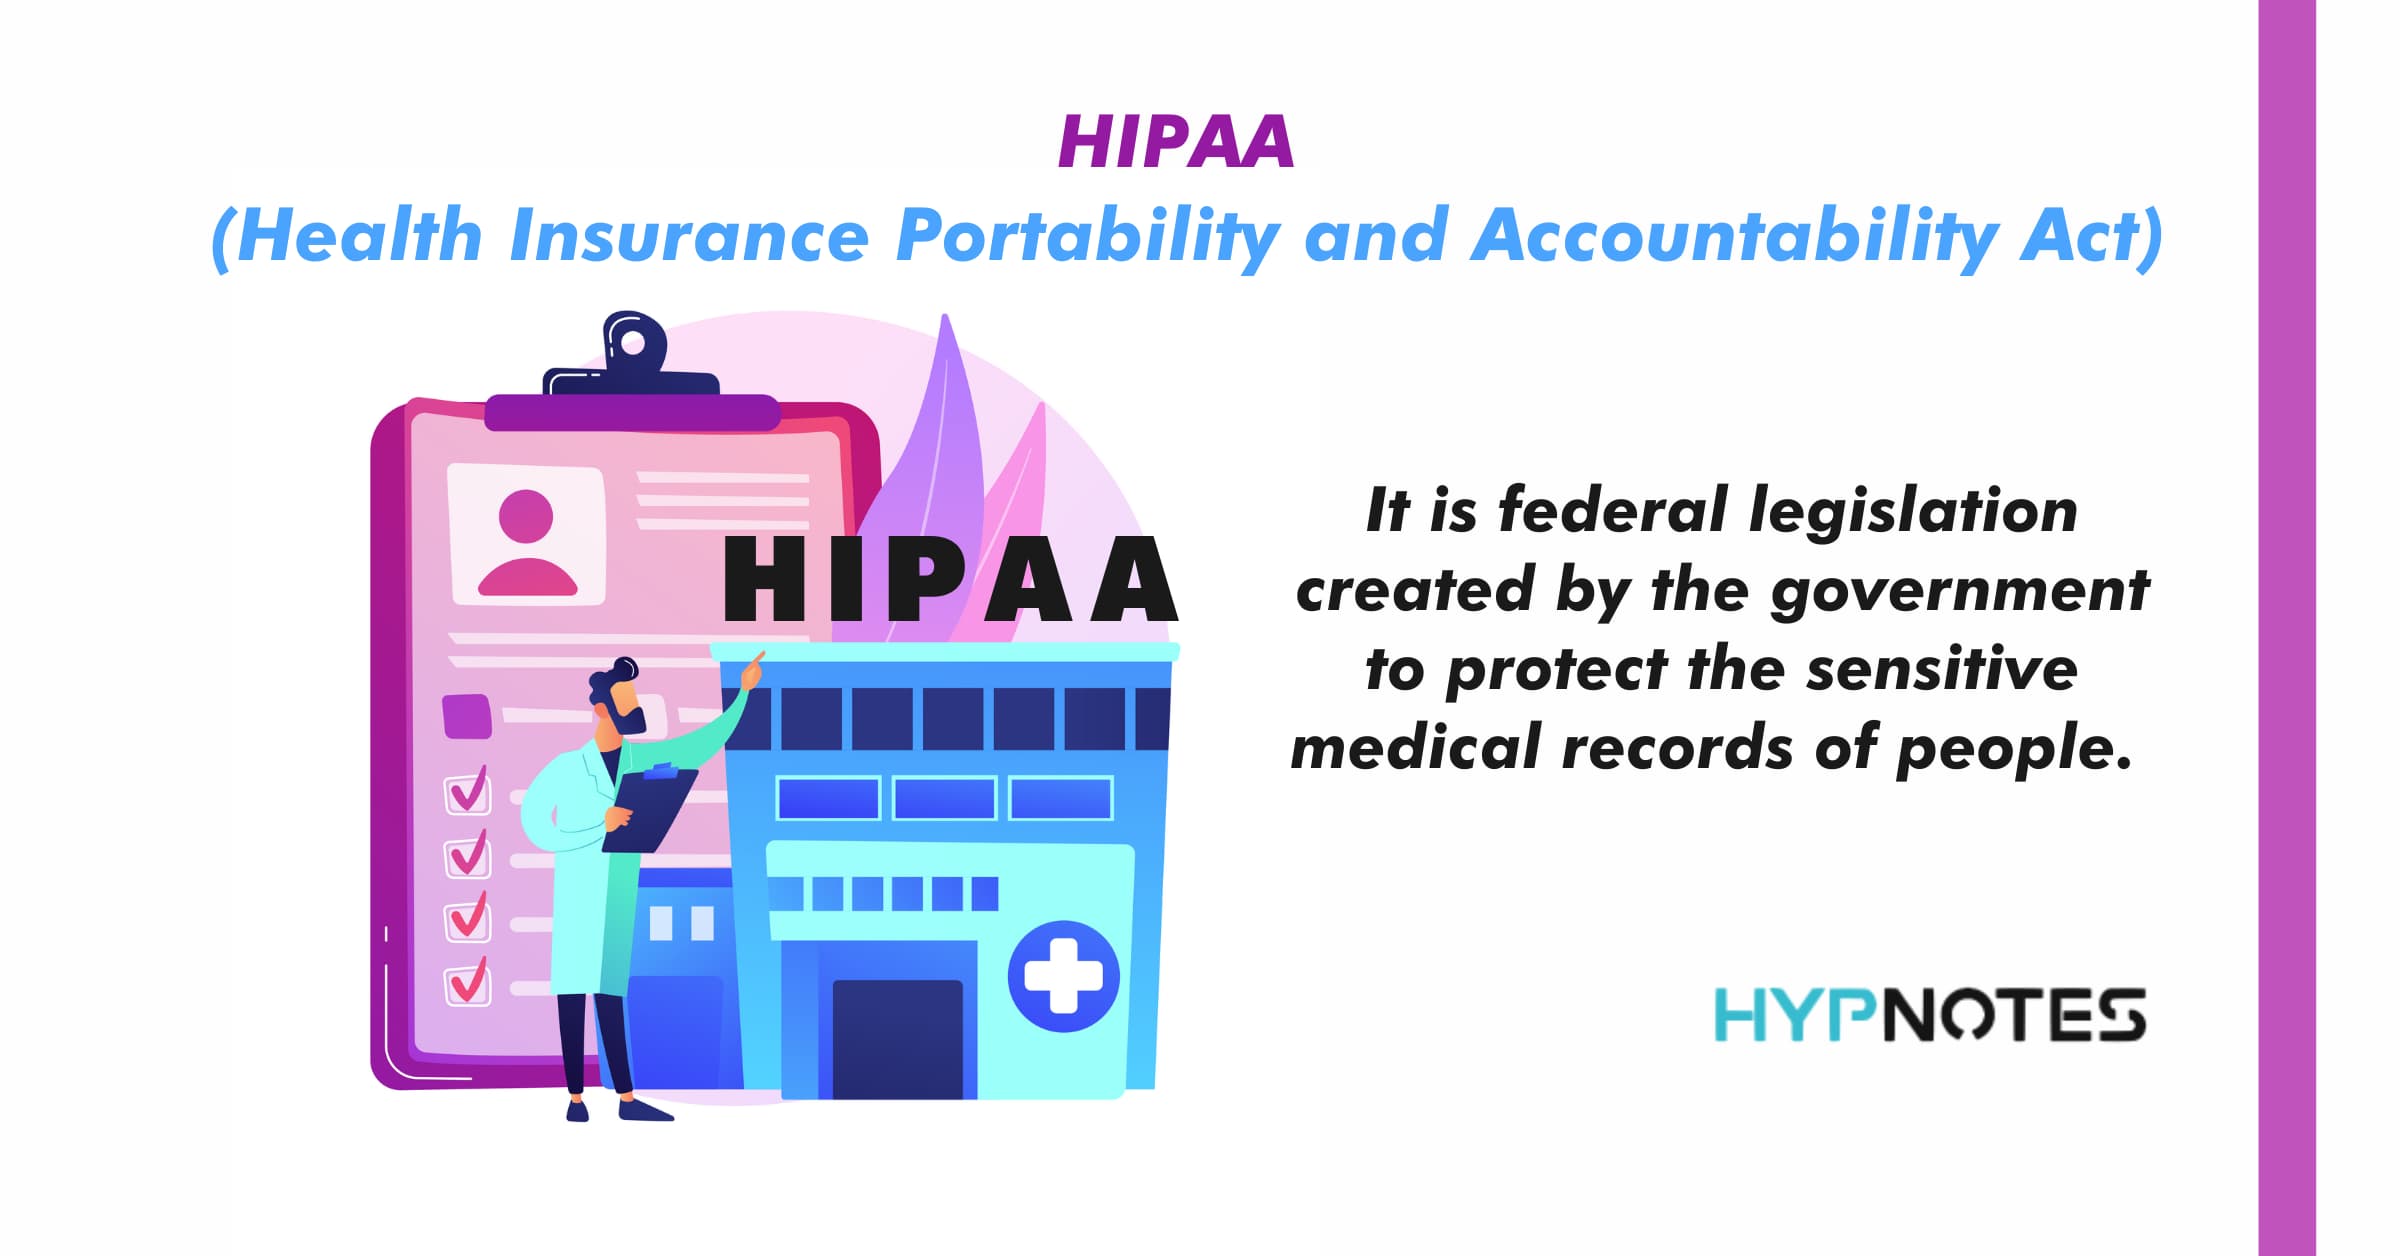 HIPAA - Health Insurance Portability and Accountability Act image